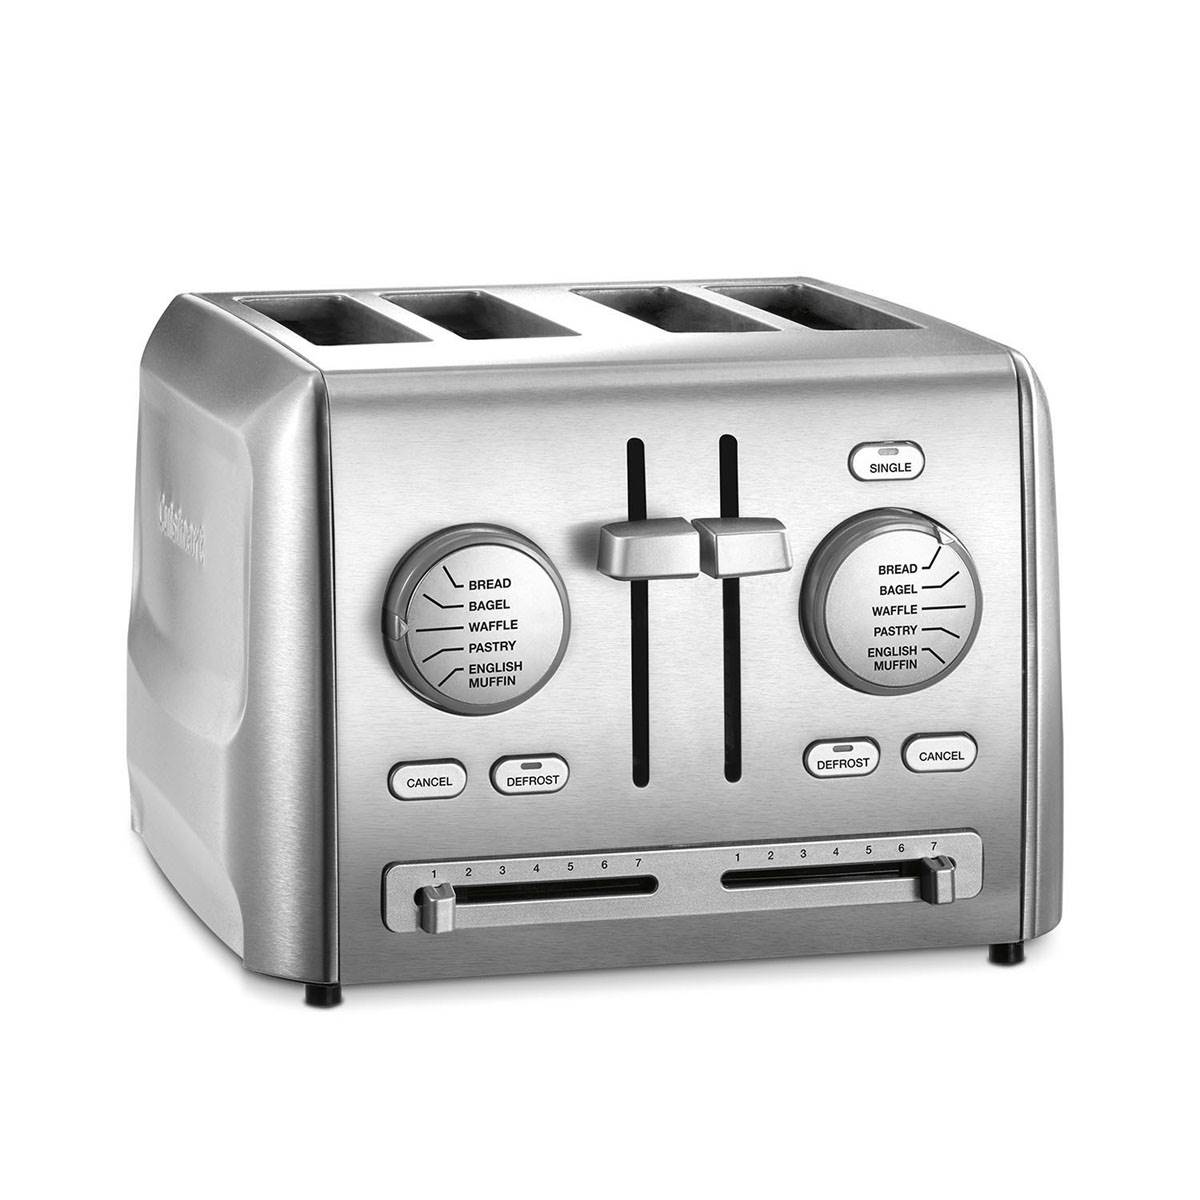 Cuisinart(R) Custom Select 4-Slice Toaster